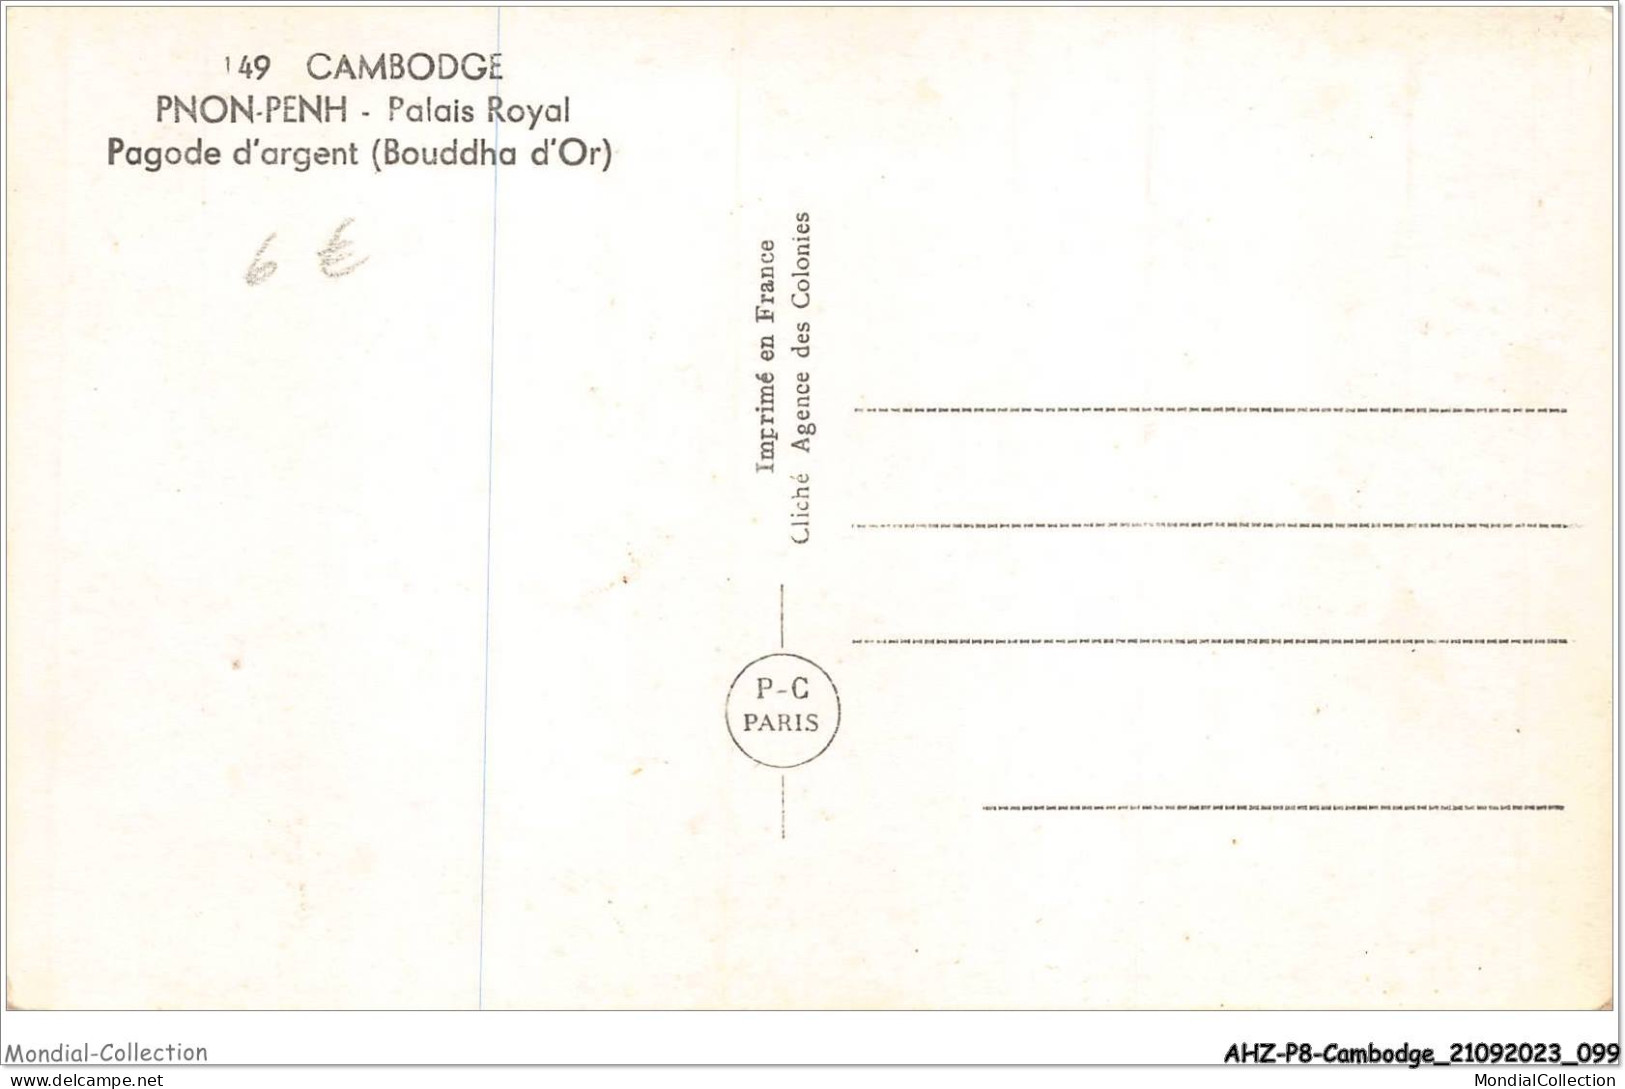 AHZP8-CAMBODGE-0732 - CAMBODGE - PNON-PENH - PALAIS ROYAL - PAGODE D'ARGENT - Cambodia